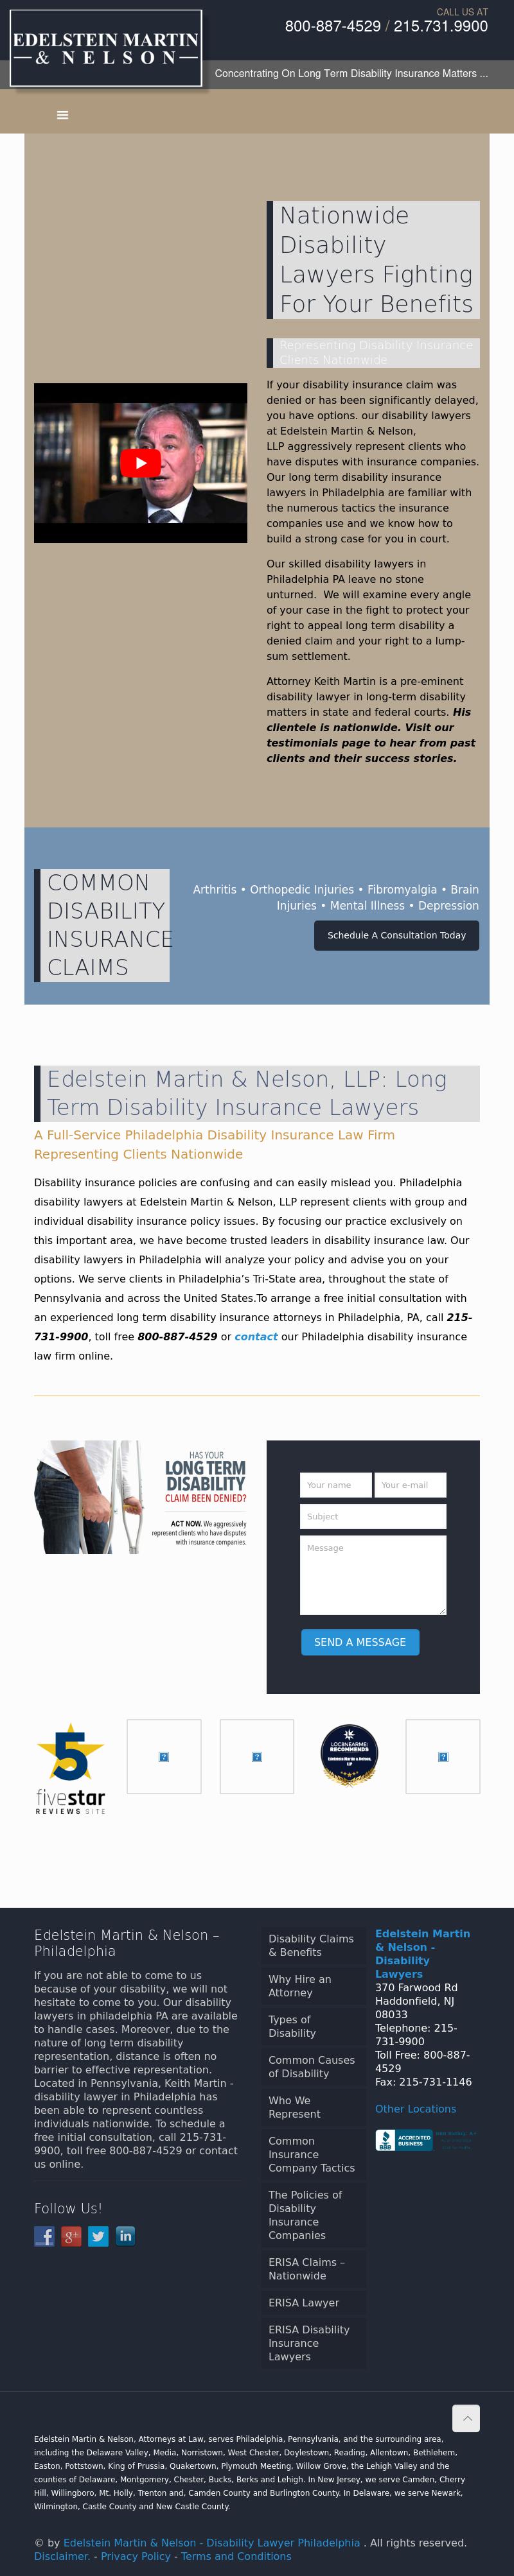 Edelstein Martin & Nelson - Disability Lawyer Philadelphia - Haddonfield NJ Lawyers